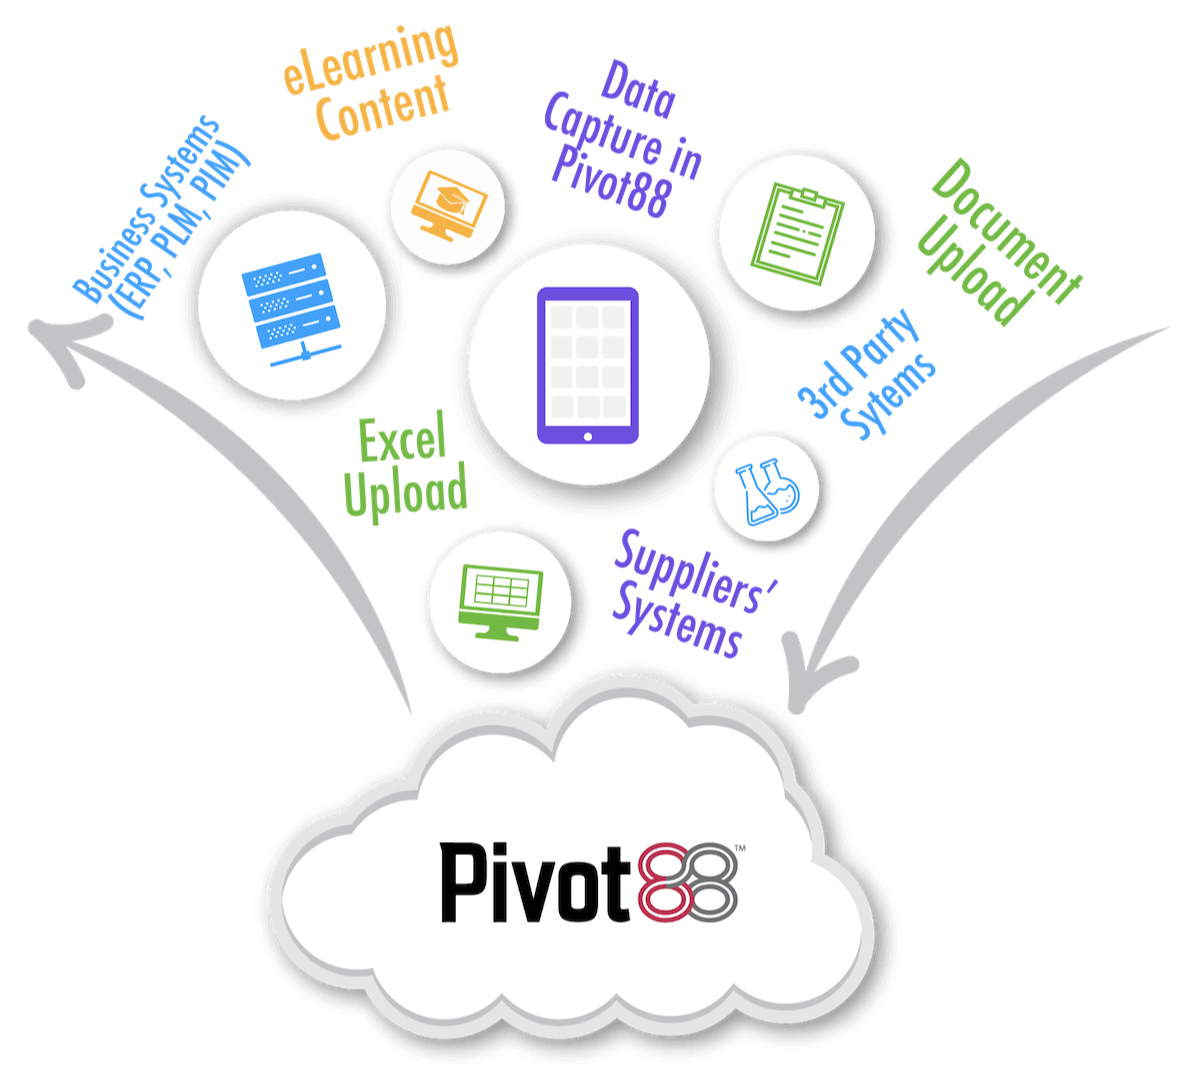 Pivot88 bi-directional integration